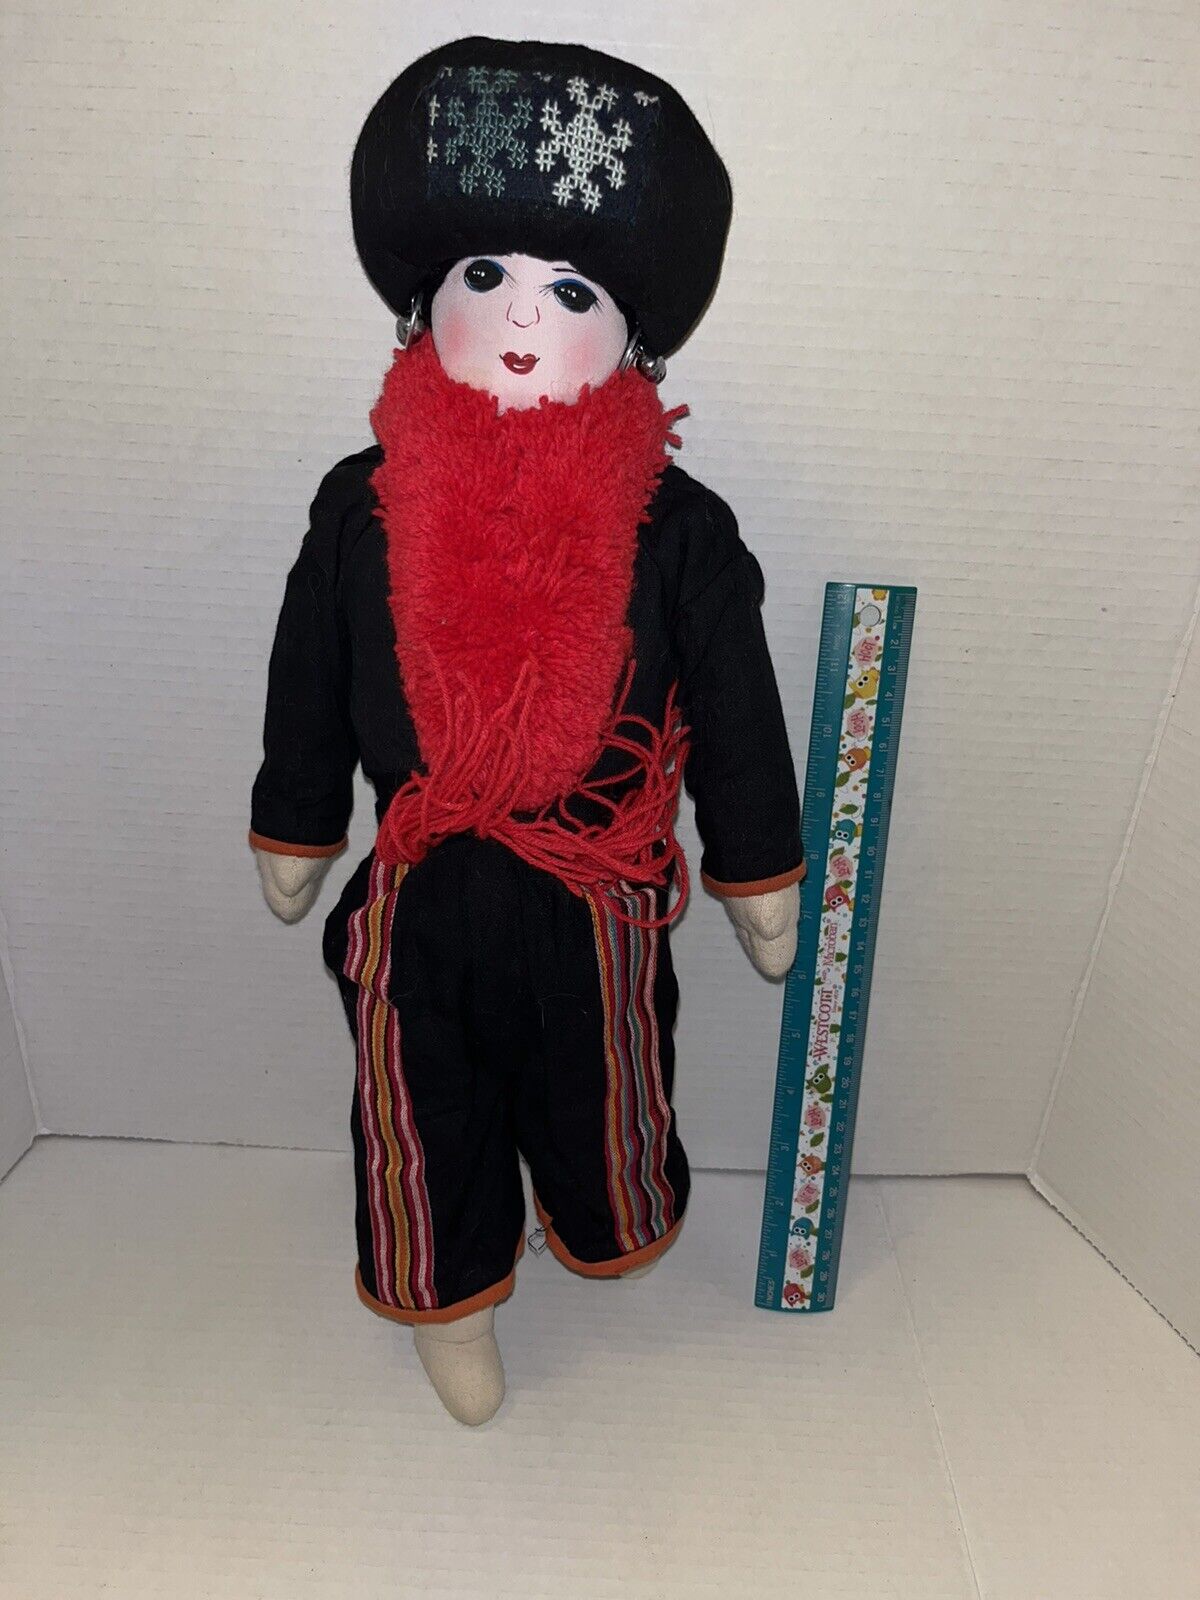 17” vintage cloth ethnic doll, Russian? Stuffed Fabric